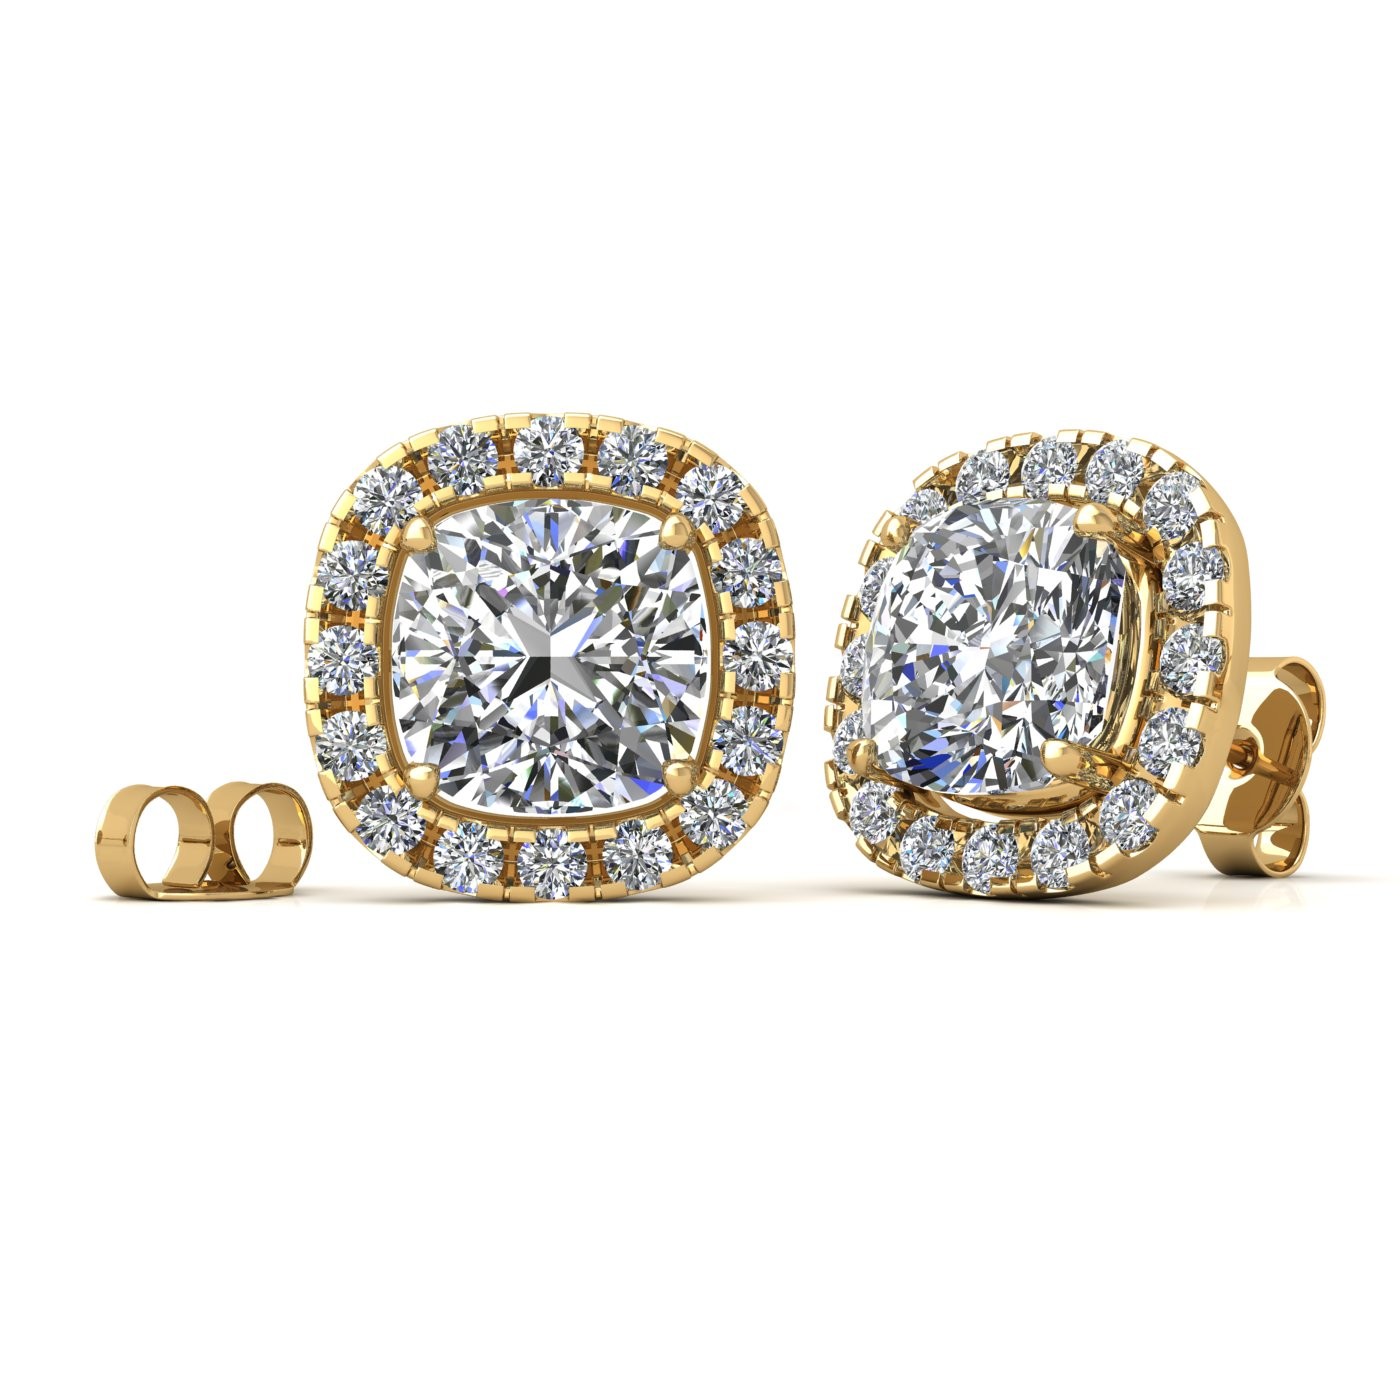 18k yellow gold 0,3 ct each (0,6 tcw) 4 prongs cushion shape diamond earrings with diamond pavÉ set halo Photos & images